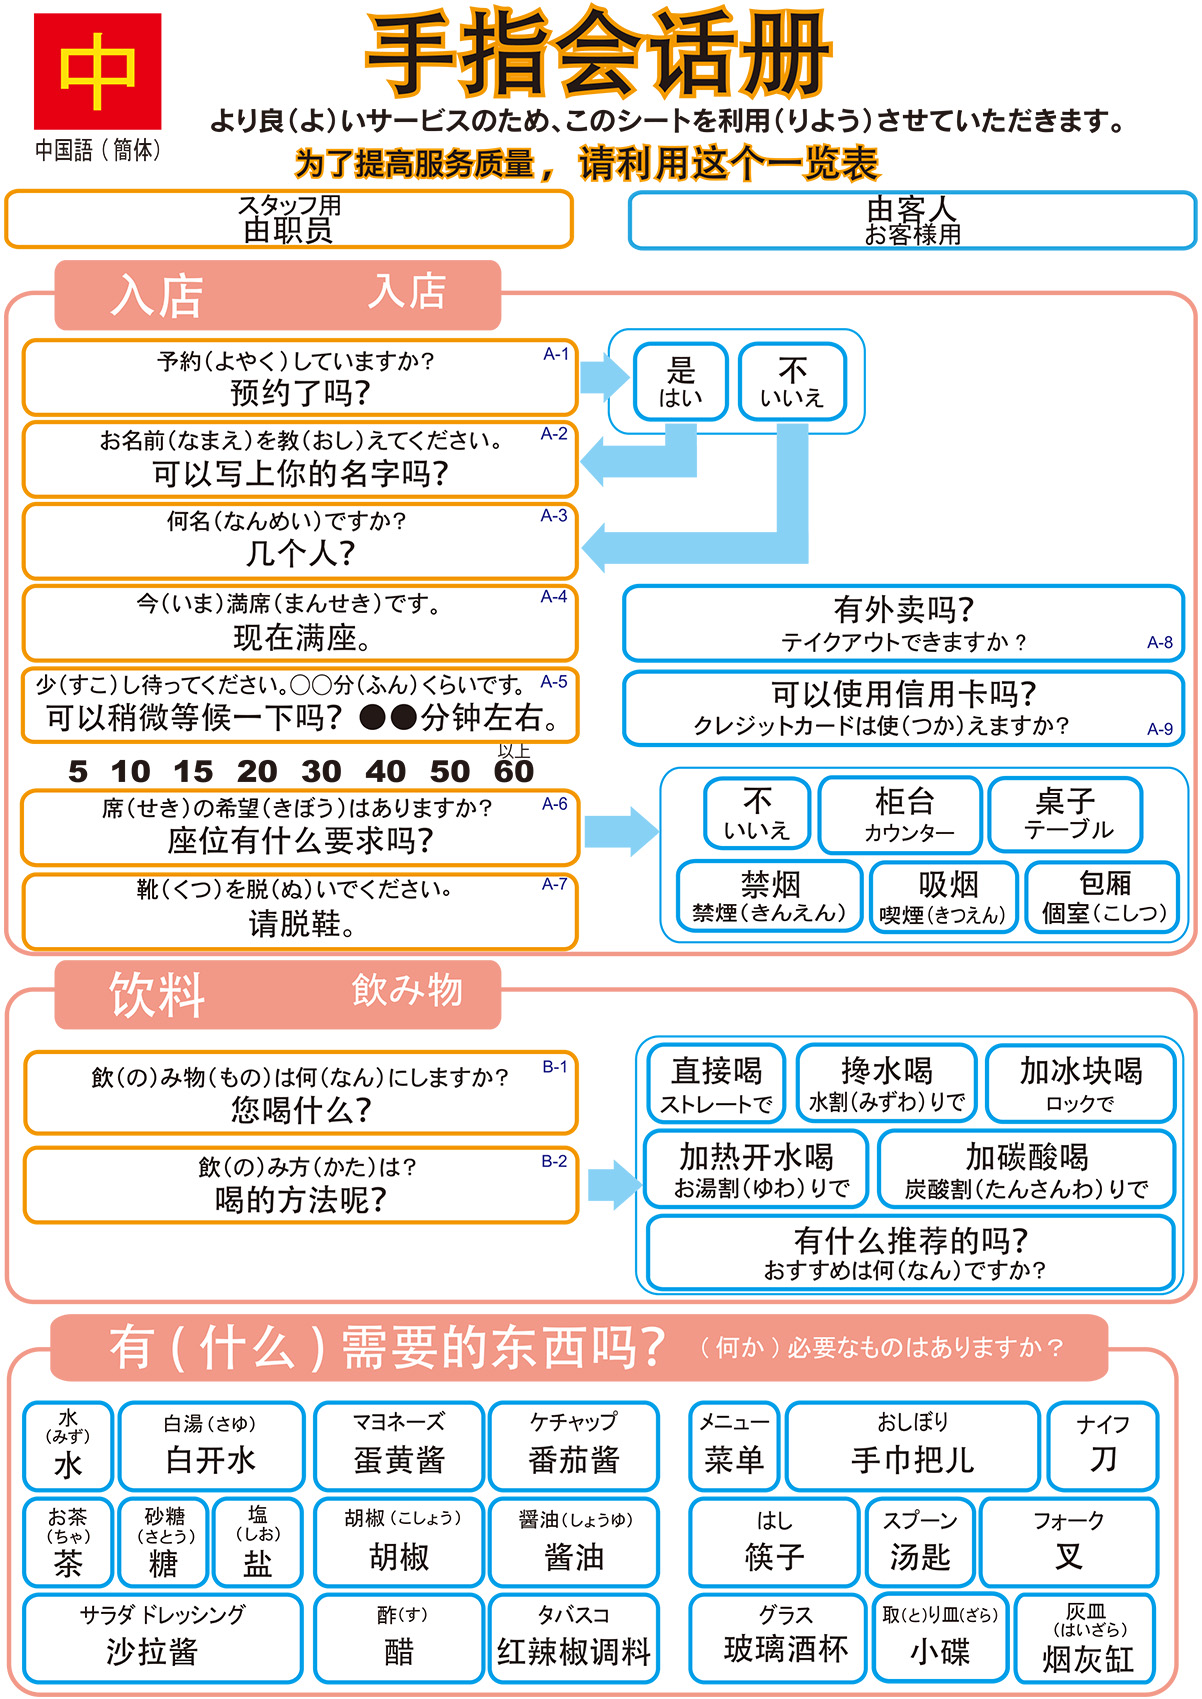 Point & Speak Sheet in Chinese